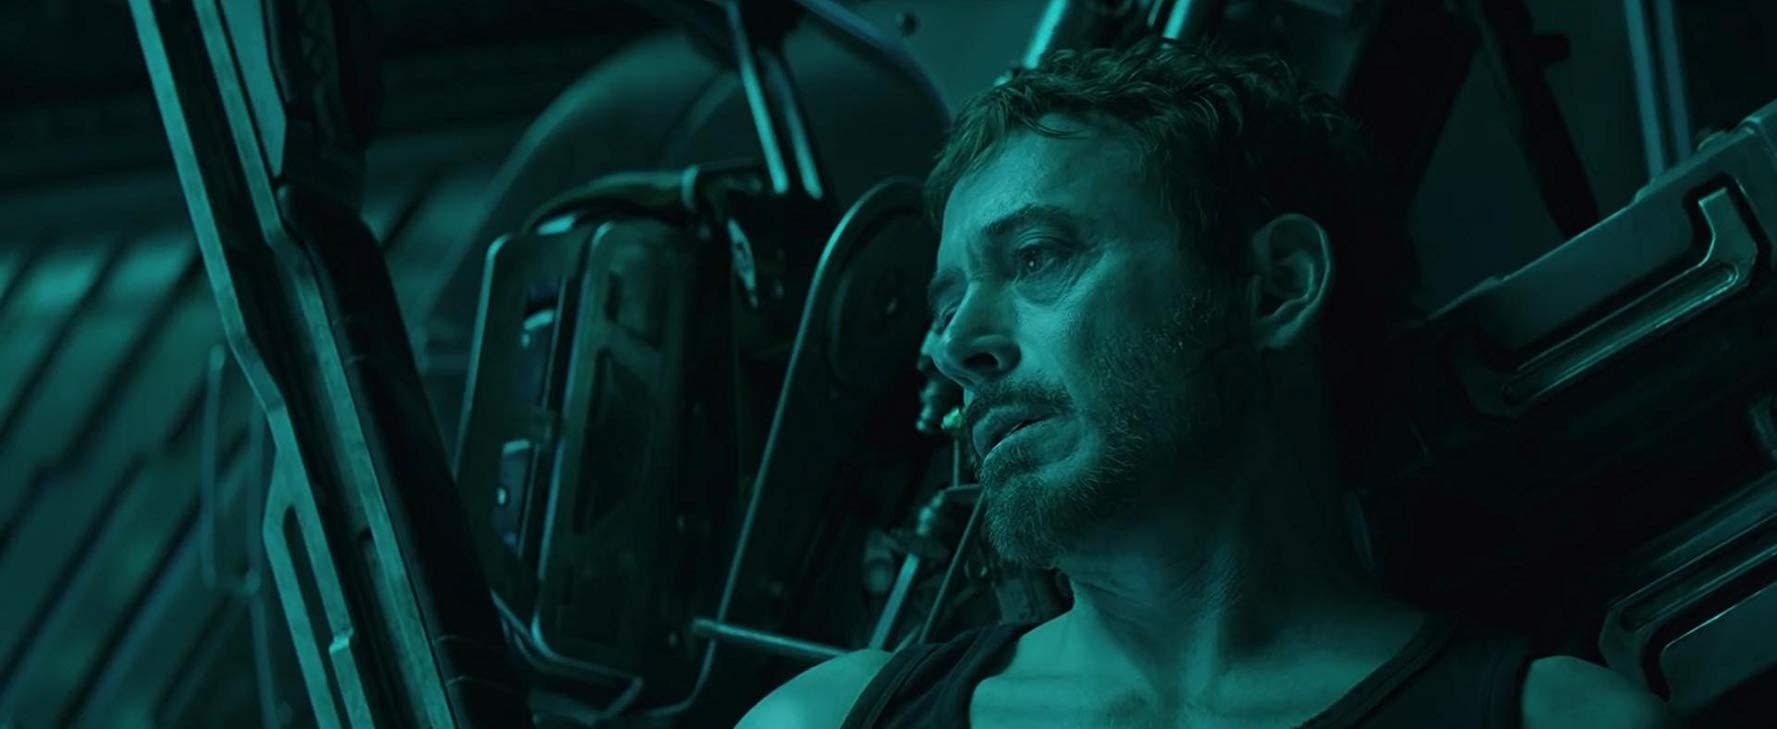 See More of Avengers: Endgame in This IMAX vs. Standard Trailer